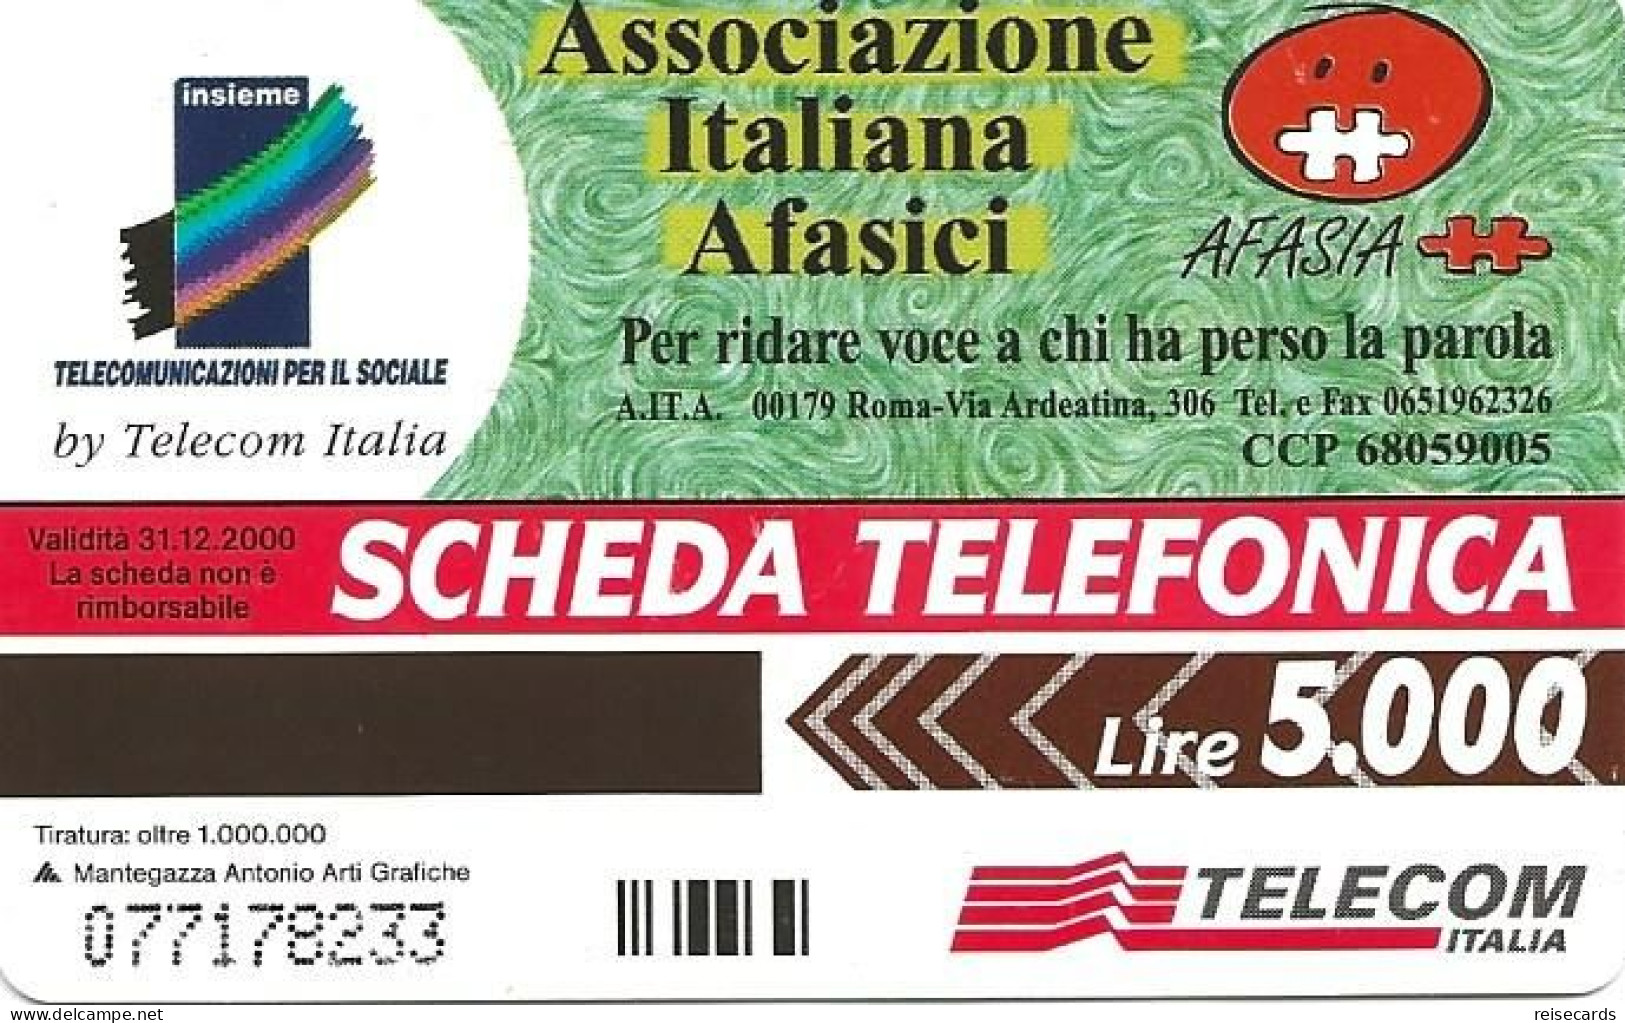 Italy: Telecom Italia - Associazione Italiana Afasici - Openbare Reclame